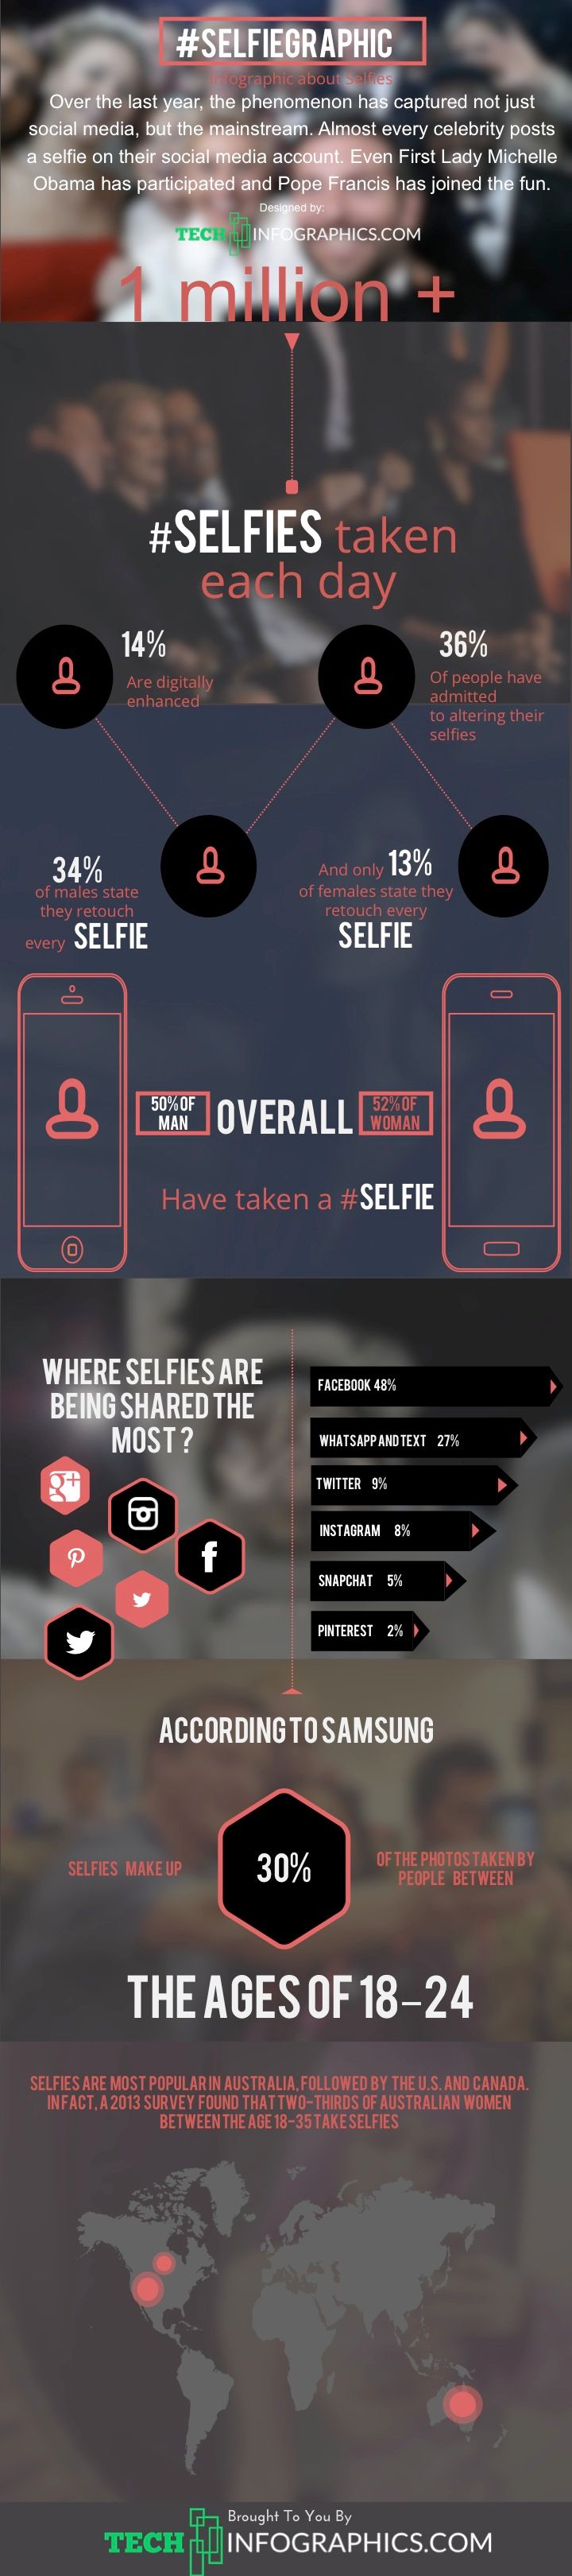 salfie-infographic-selfiegraphic